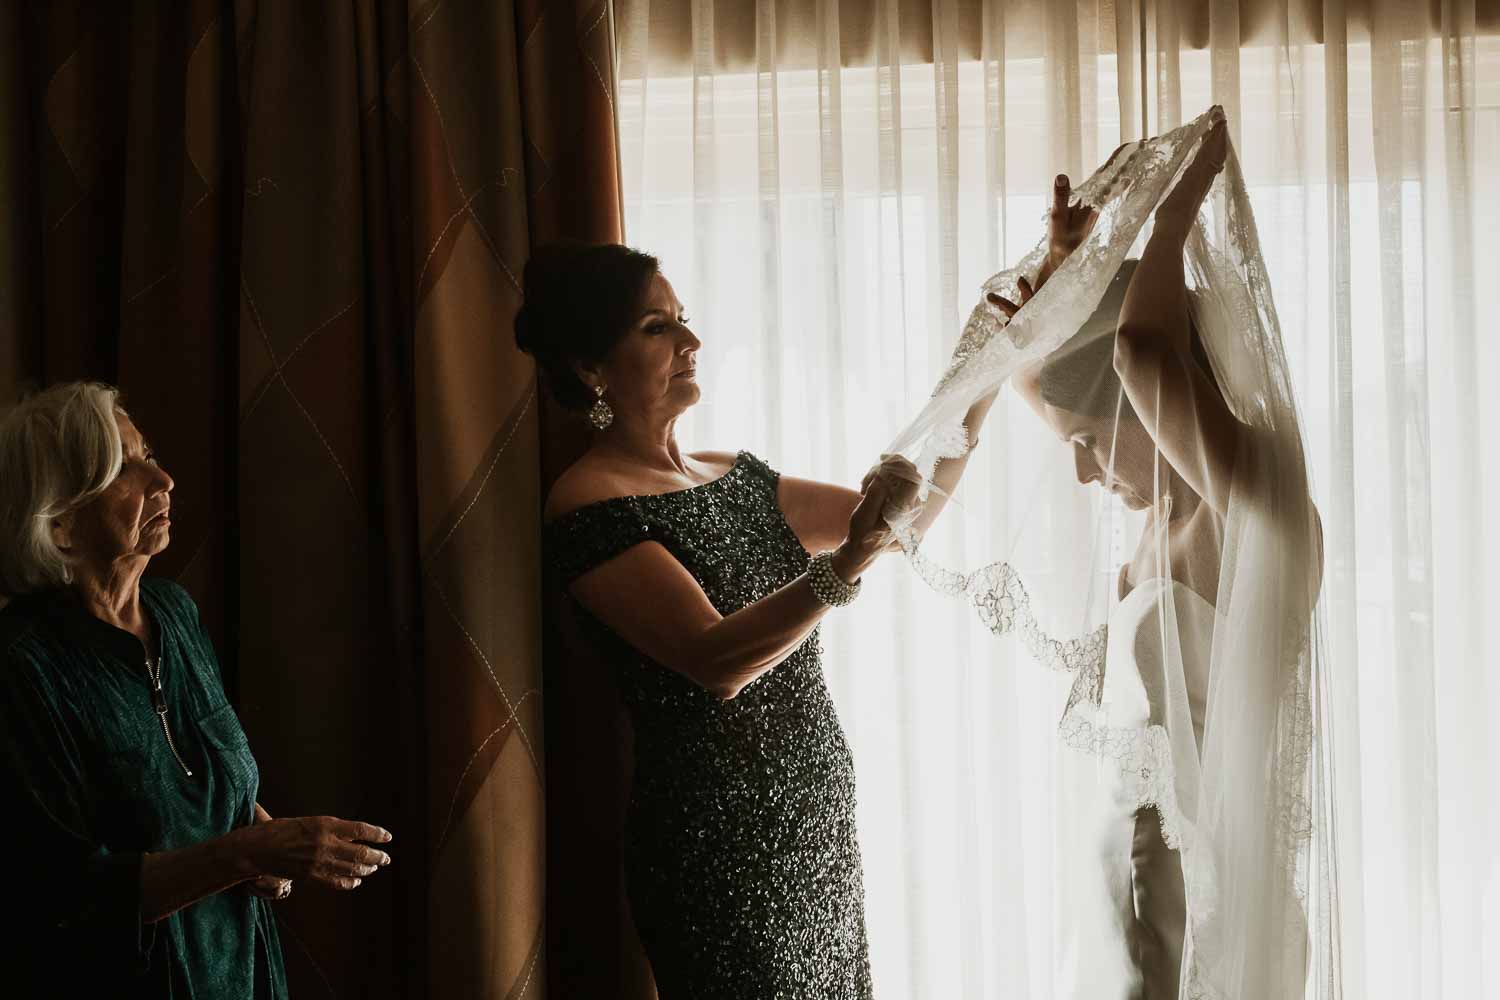 Texas documentary wedding photographer Philip Thomas captures three generations. A bride dresses for her wedding day in San Antonio Texas -photo by documentary photographer Philip Thomas L1001096